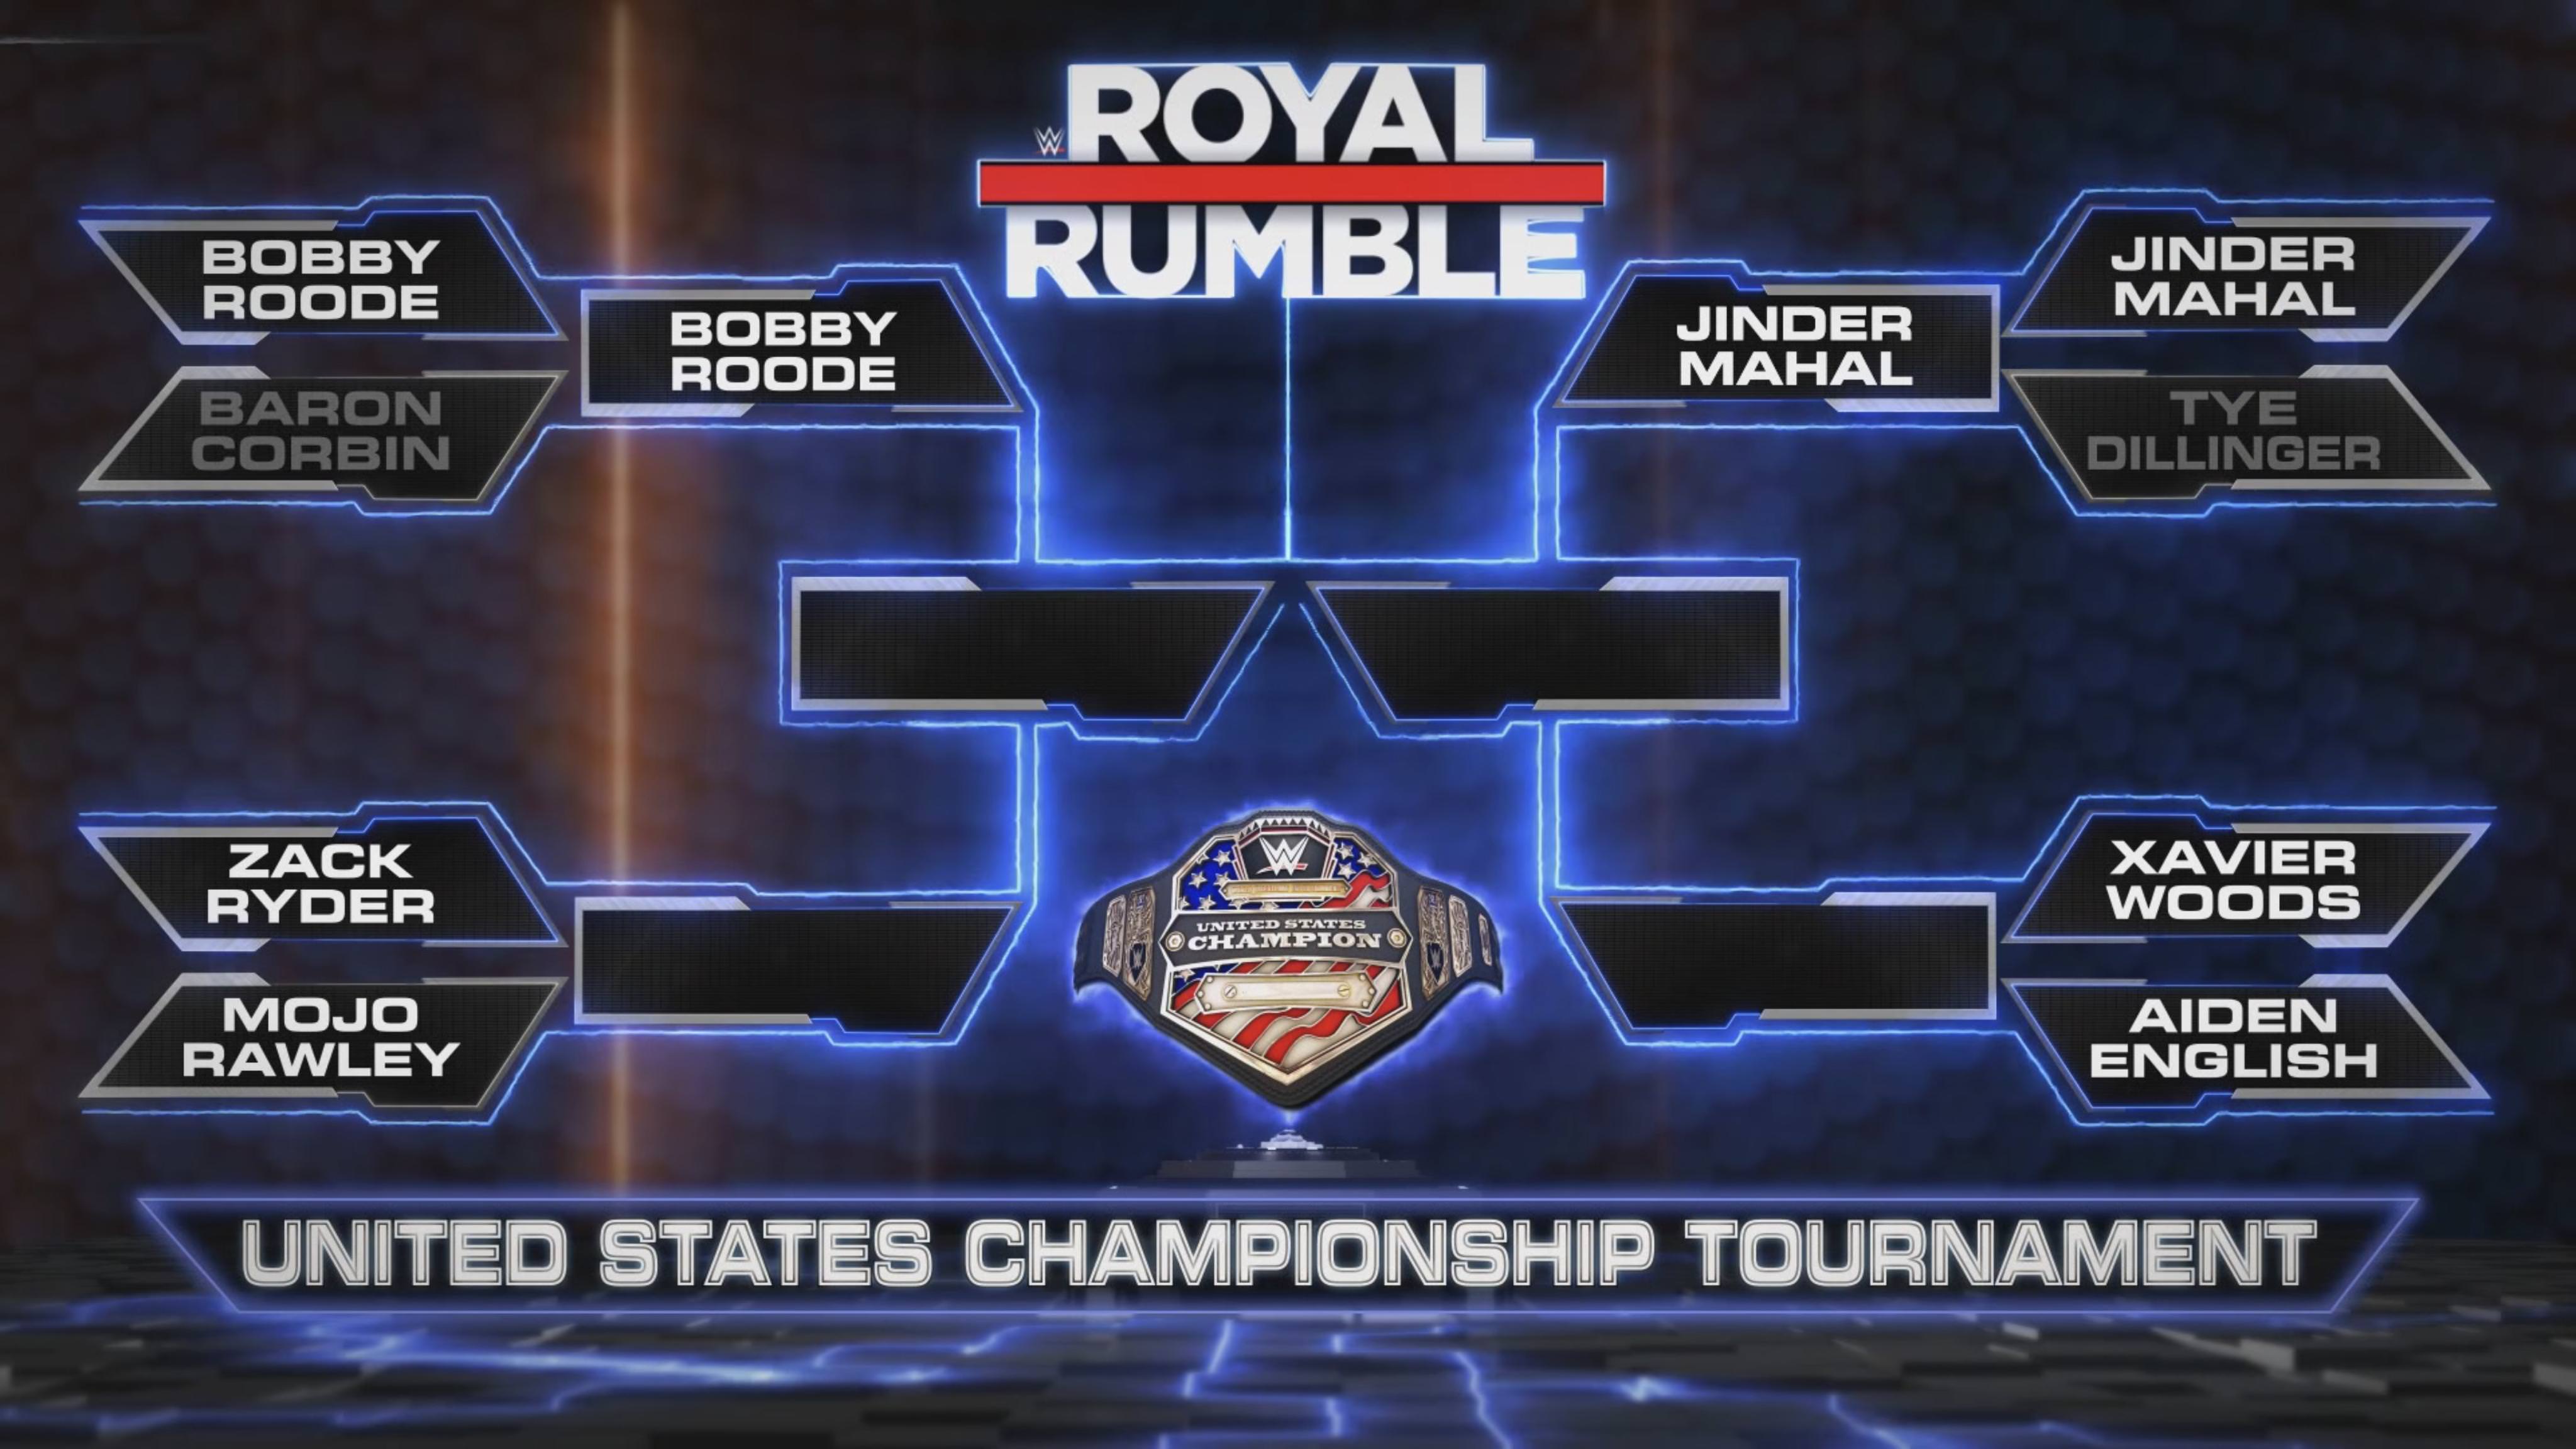 WWE United States Championship tournament bracket announced